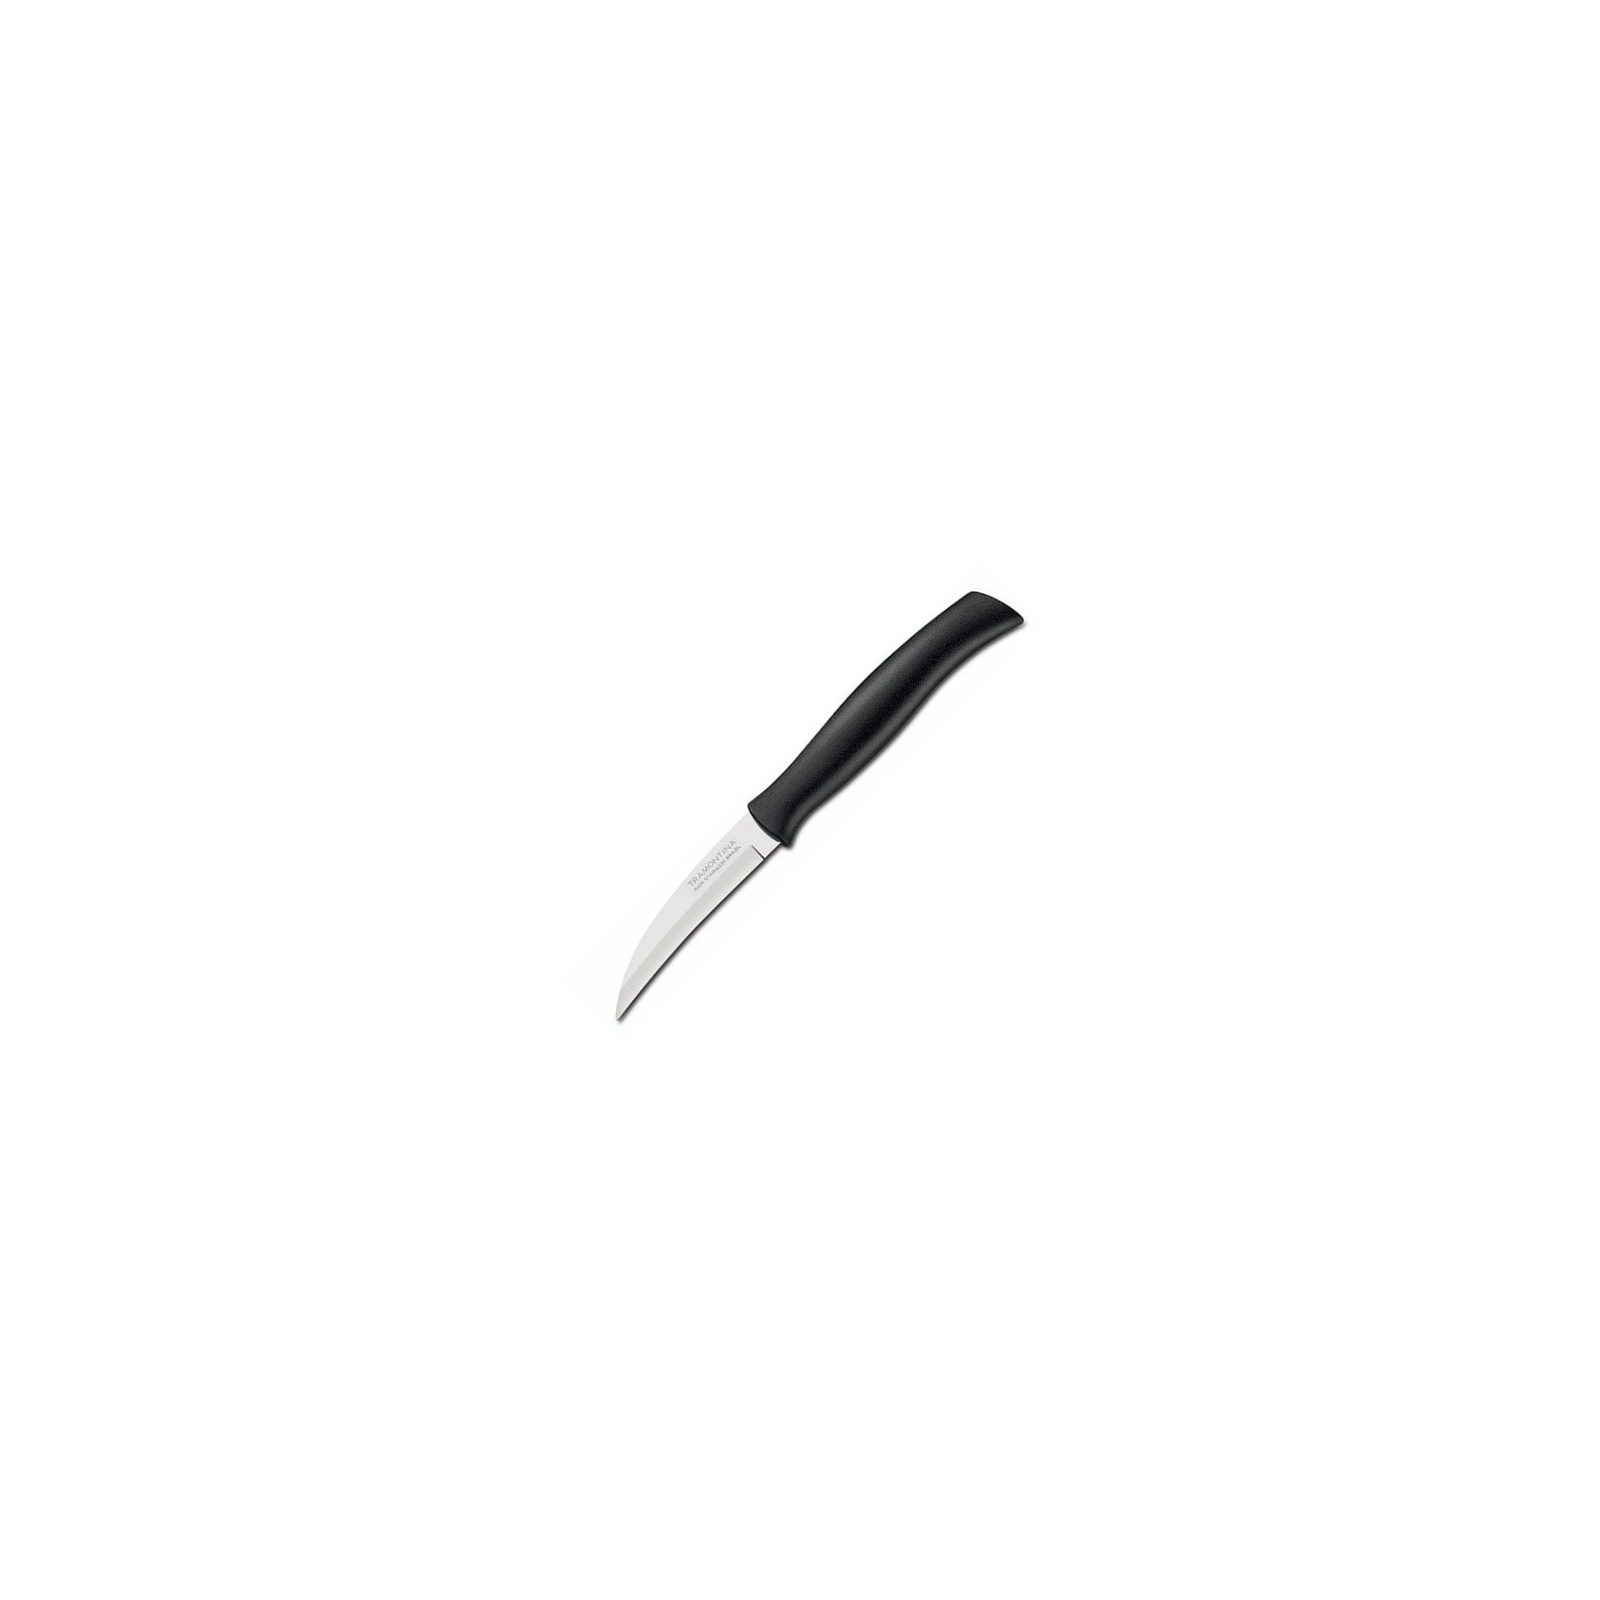 Набор ножей Tramontina Athus Black 76 мм 12 шт (23079/003)